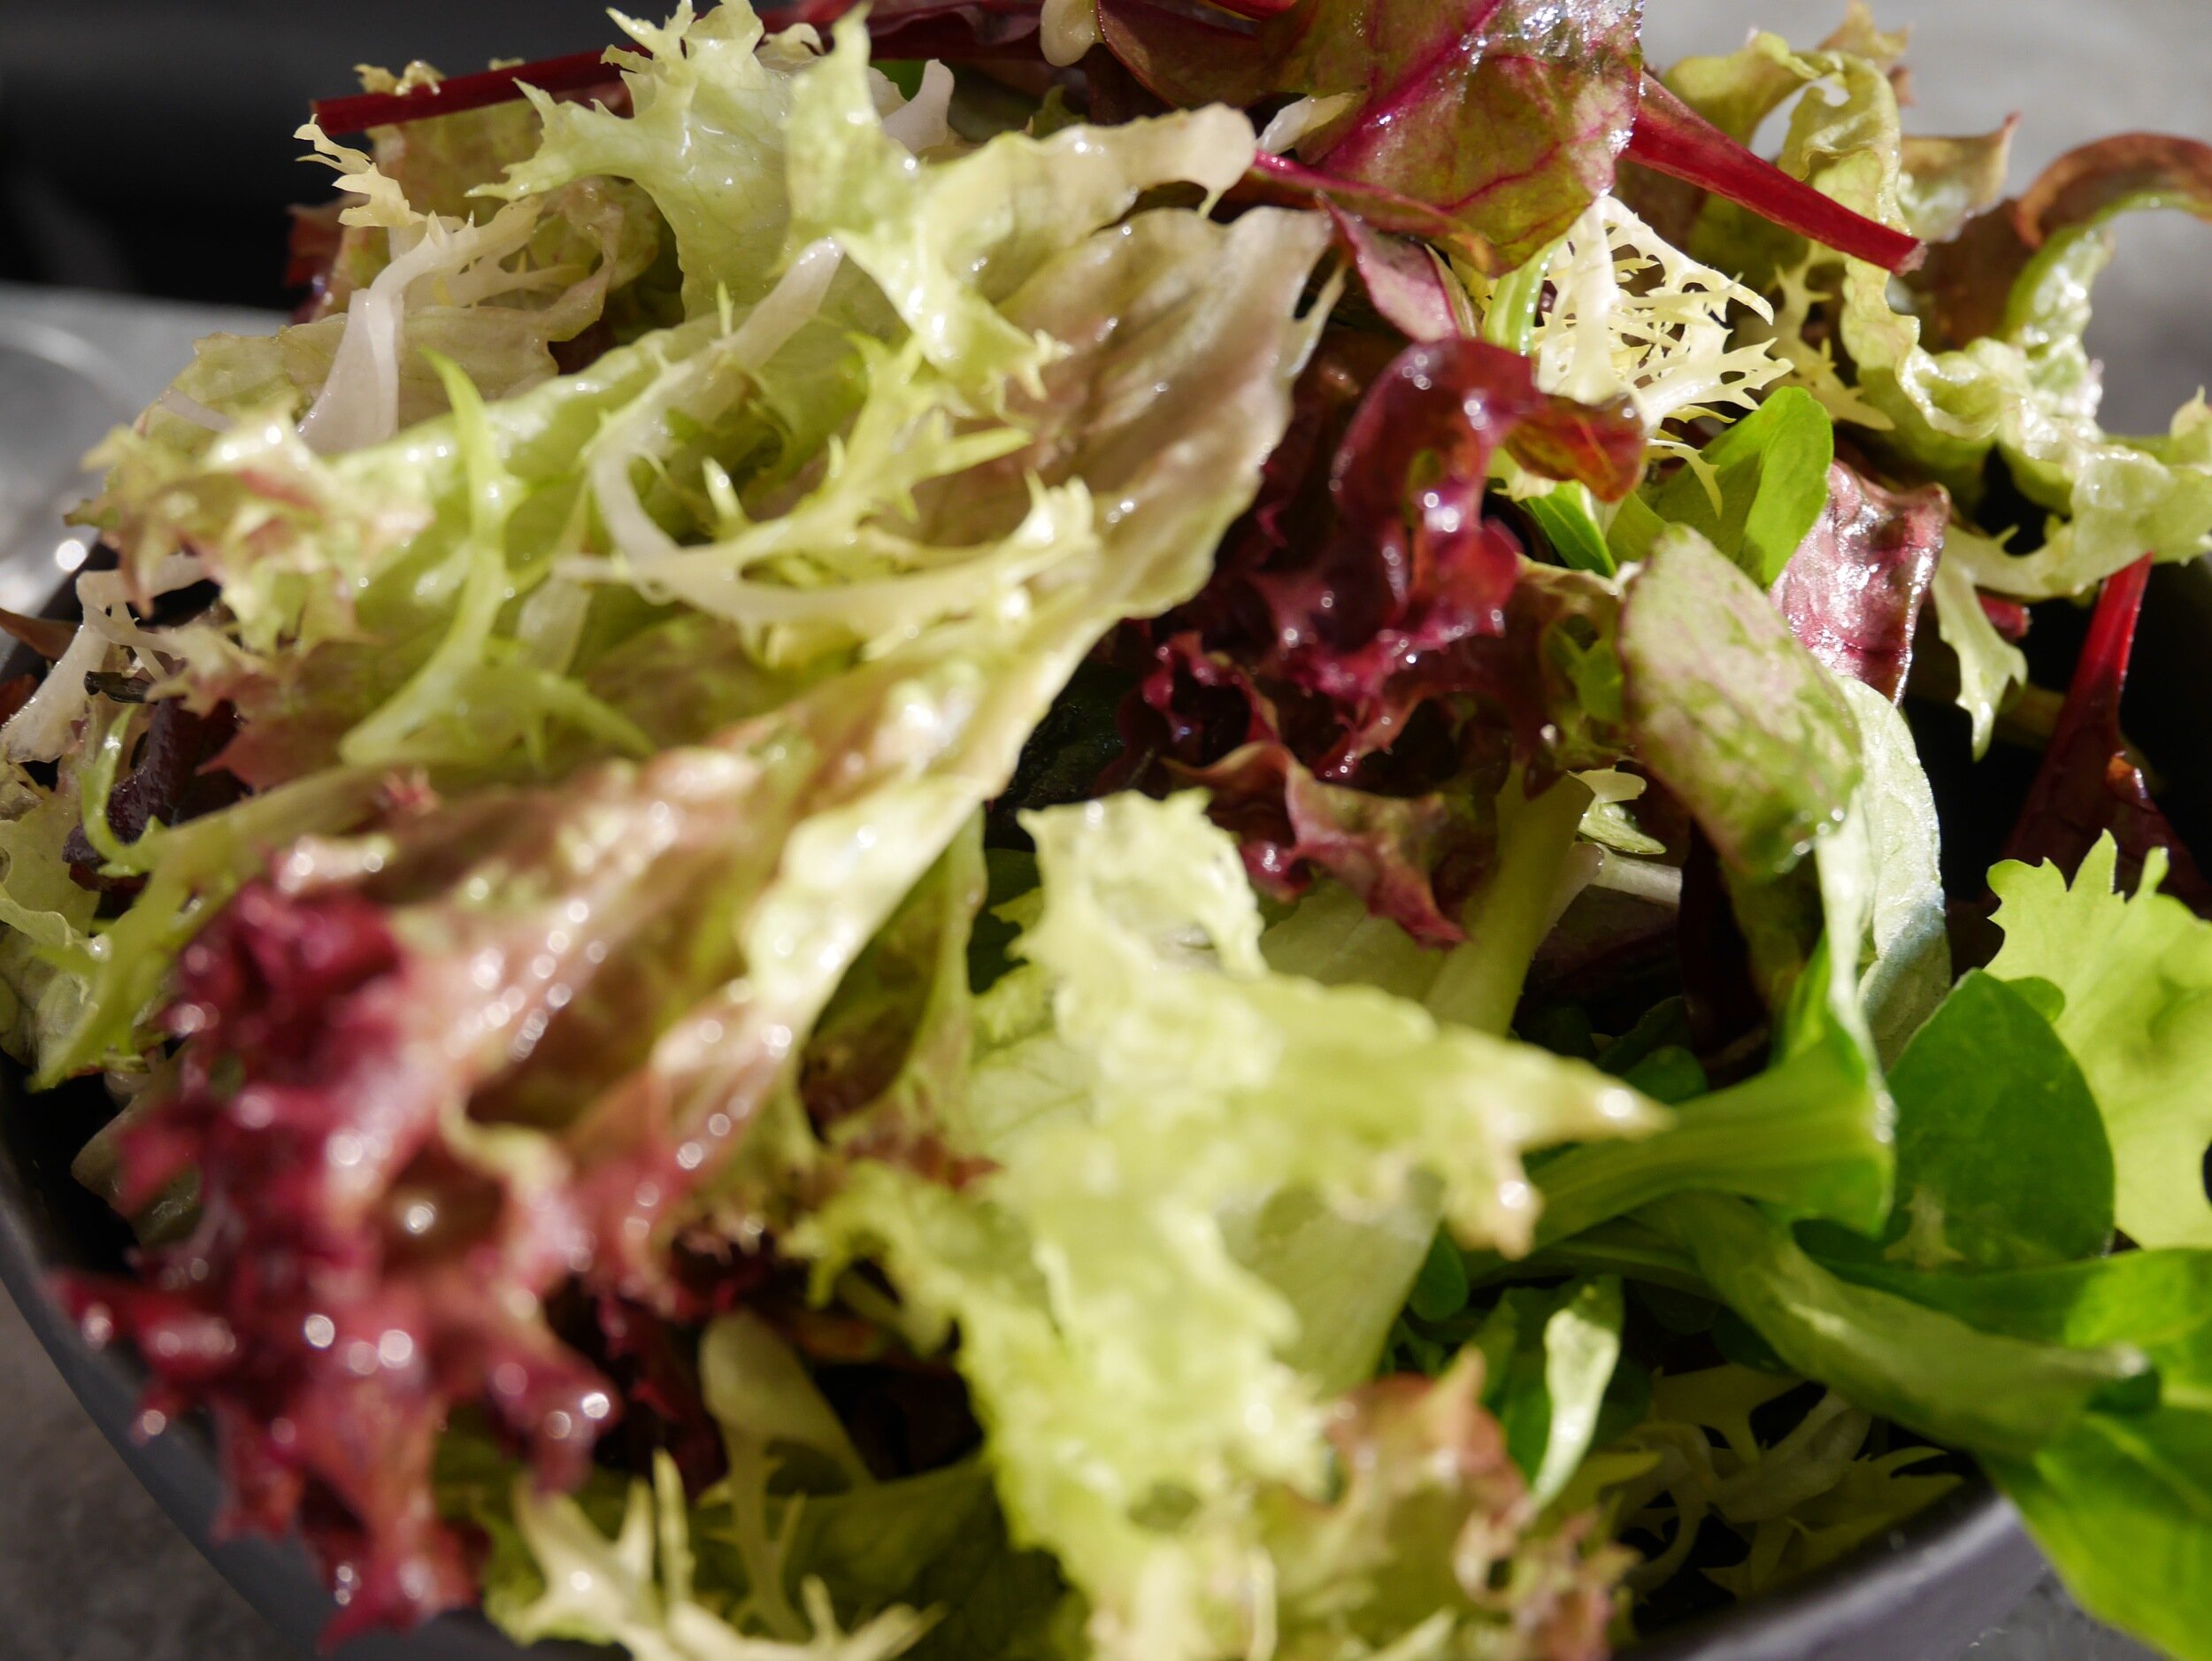 fresh, crisp, simple salad